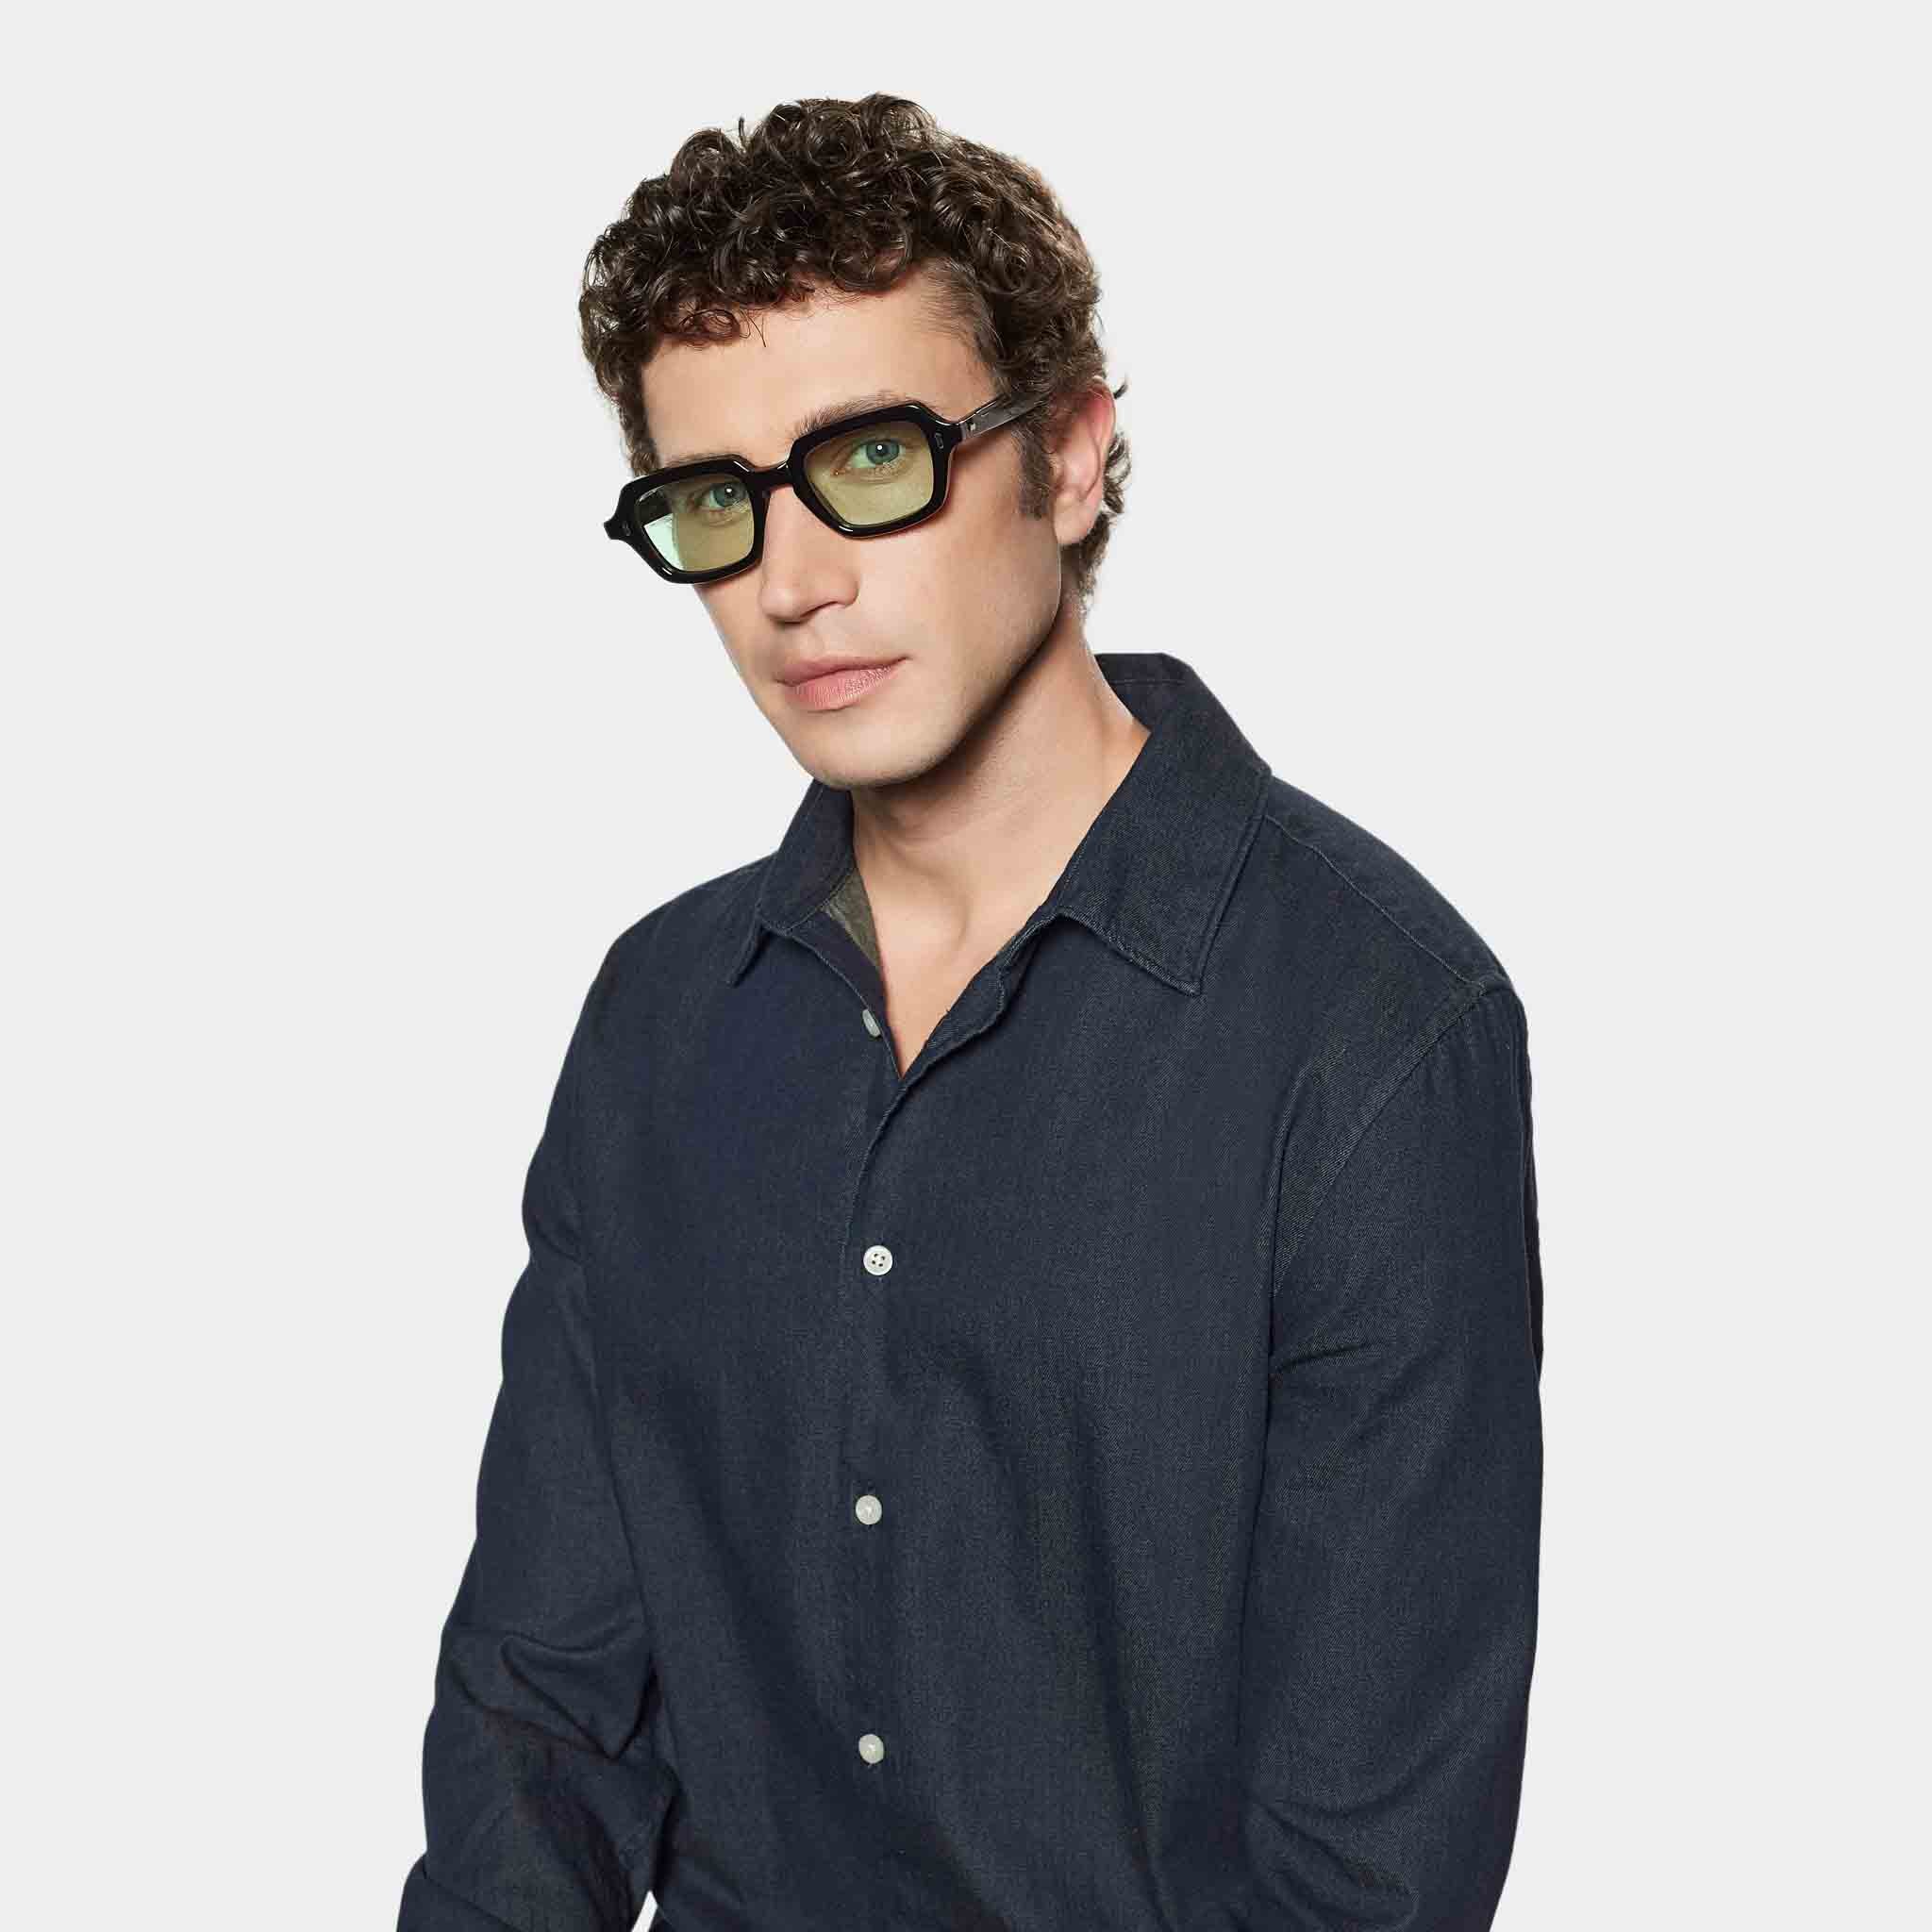 sunglasses-oak-eco-black-light-green-sustainable-tbd-eyewear-man